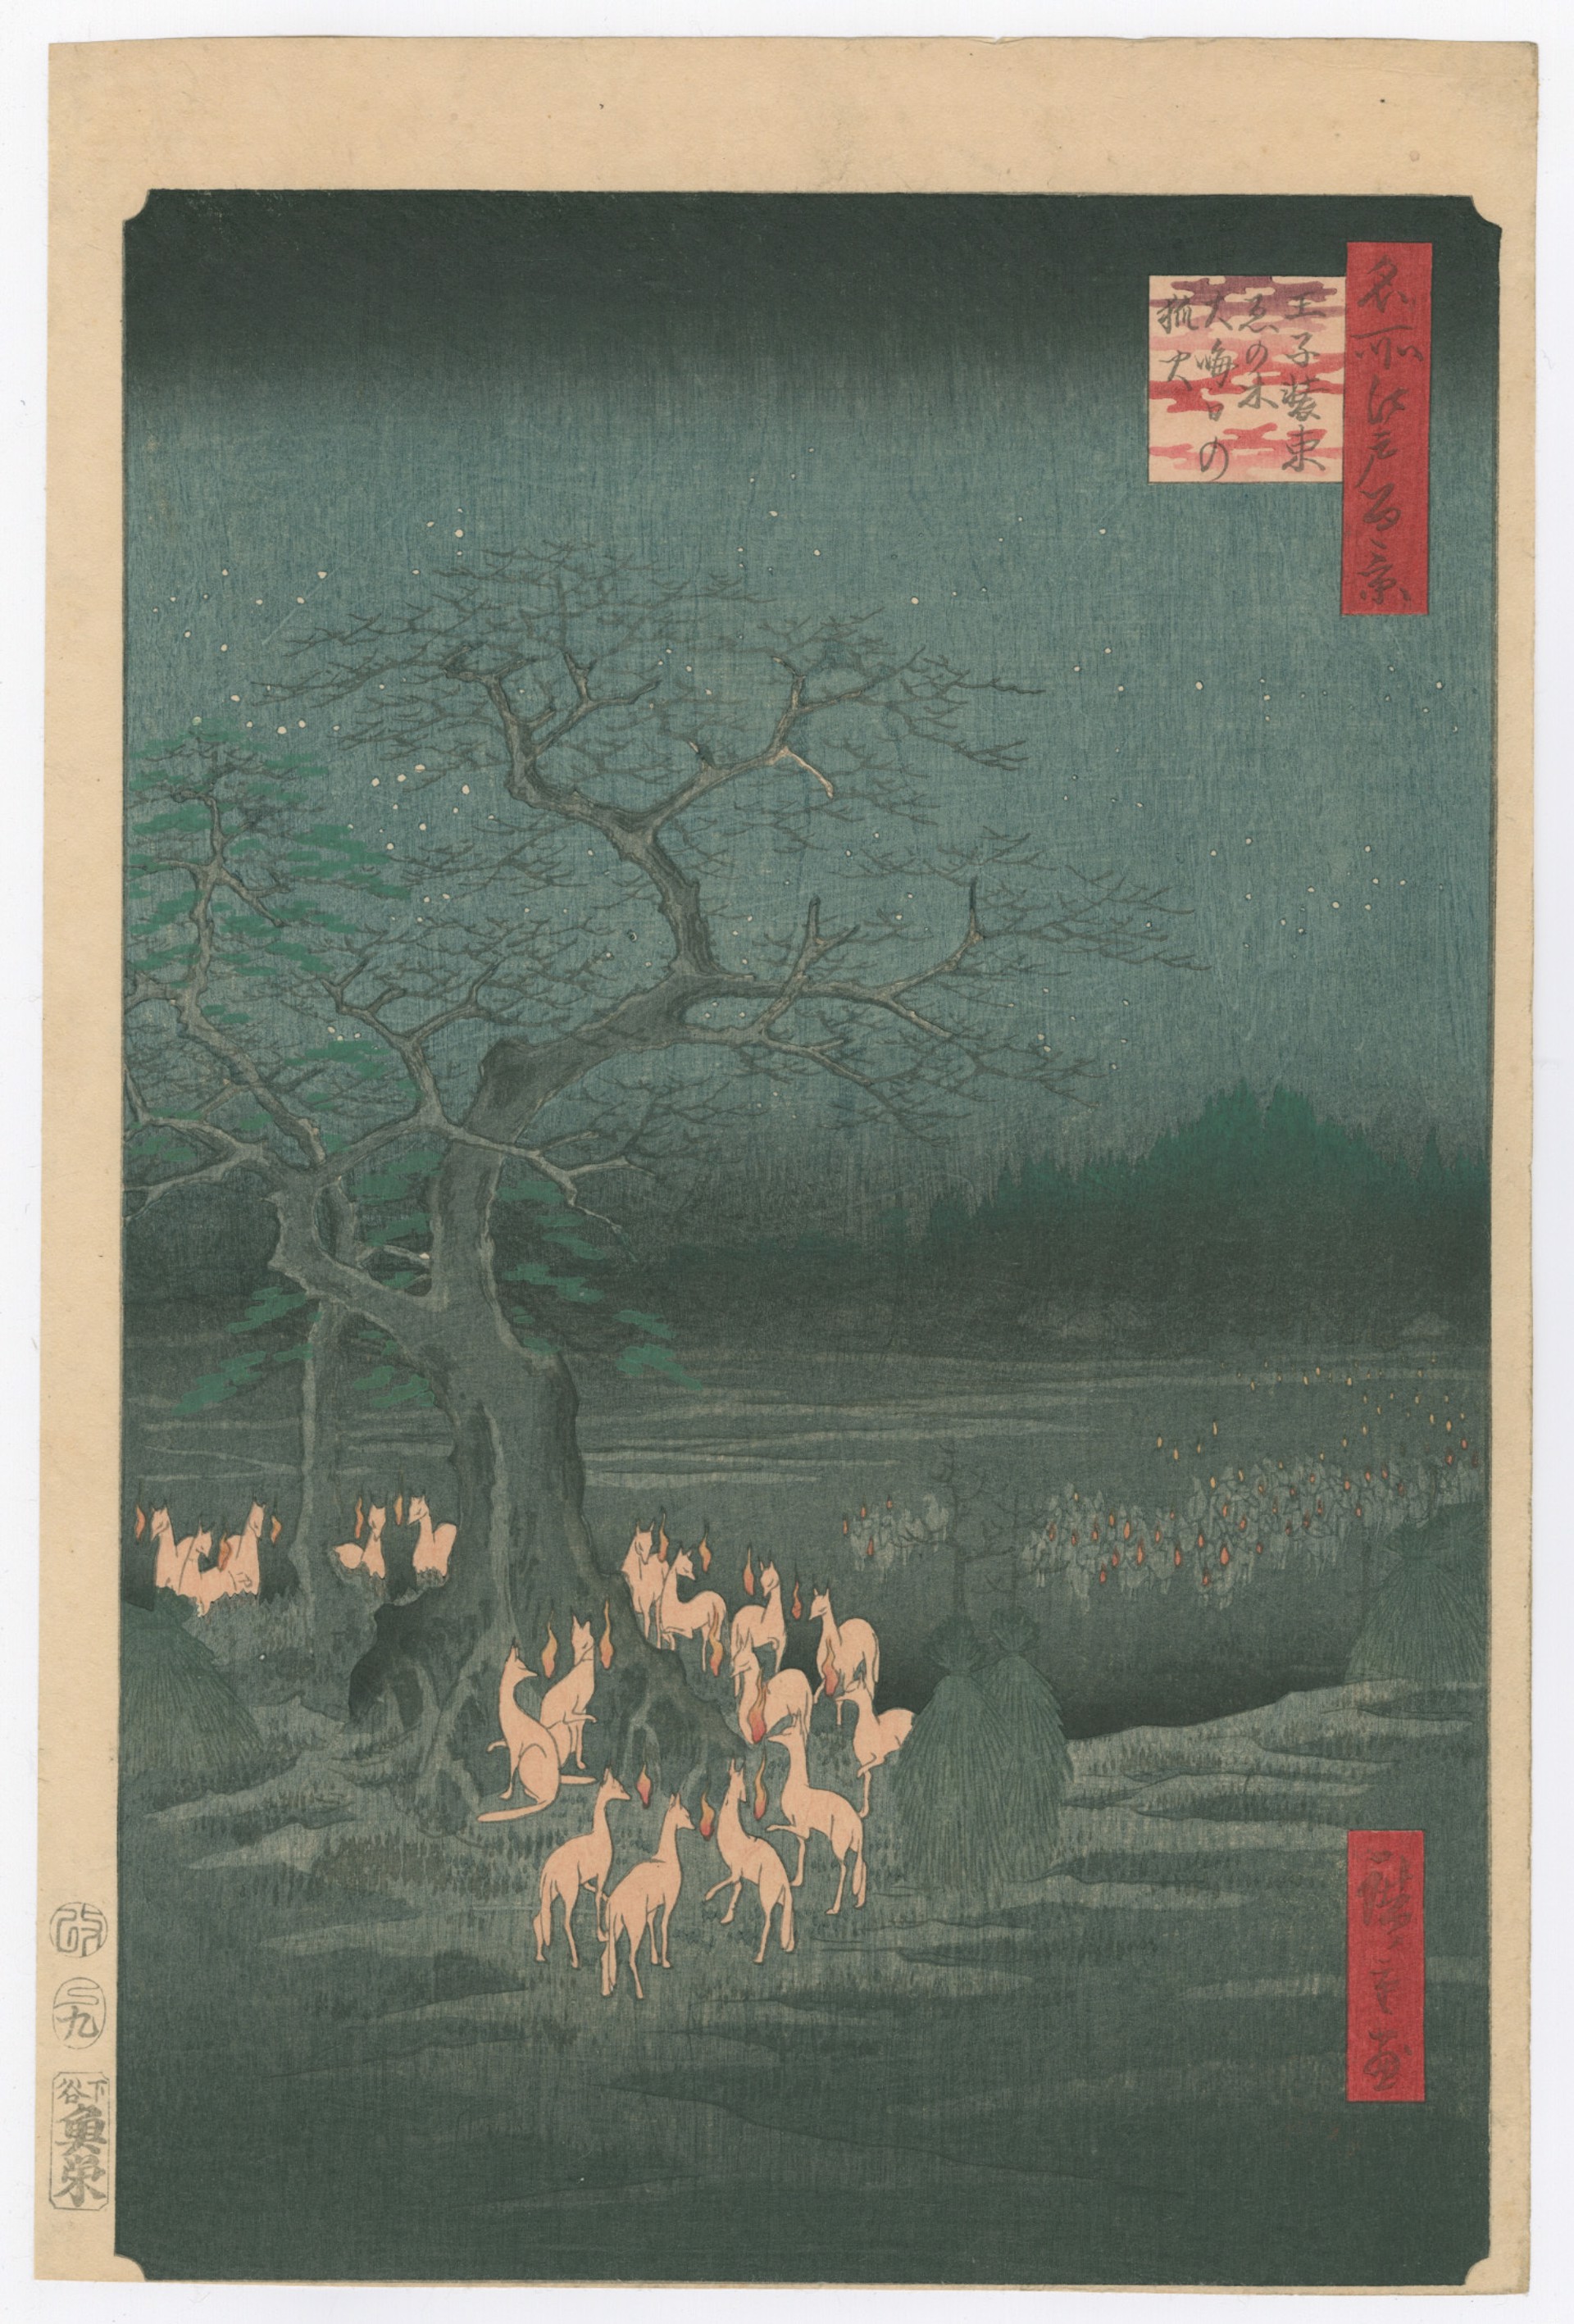 #118 Foxfires on New Years Eve at the Shozoku Hackberry Tree, Oji 100 Views of Edo by Hiroshige